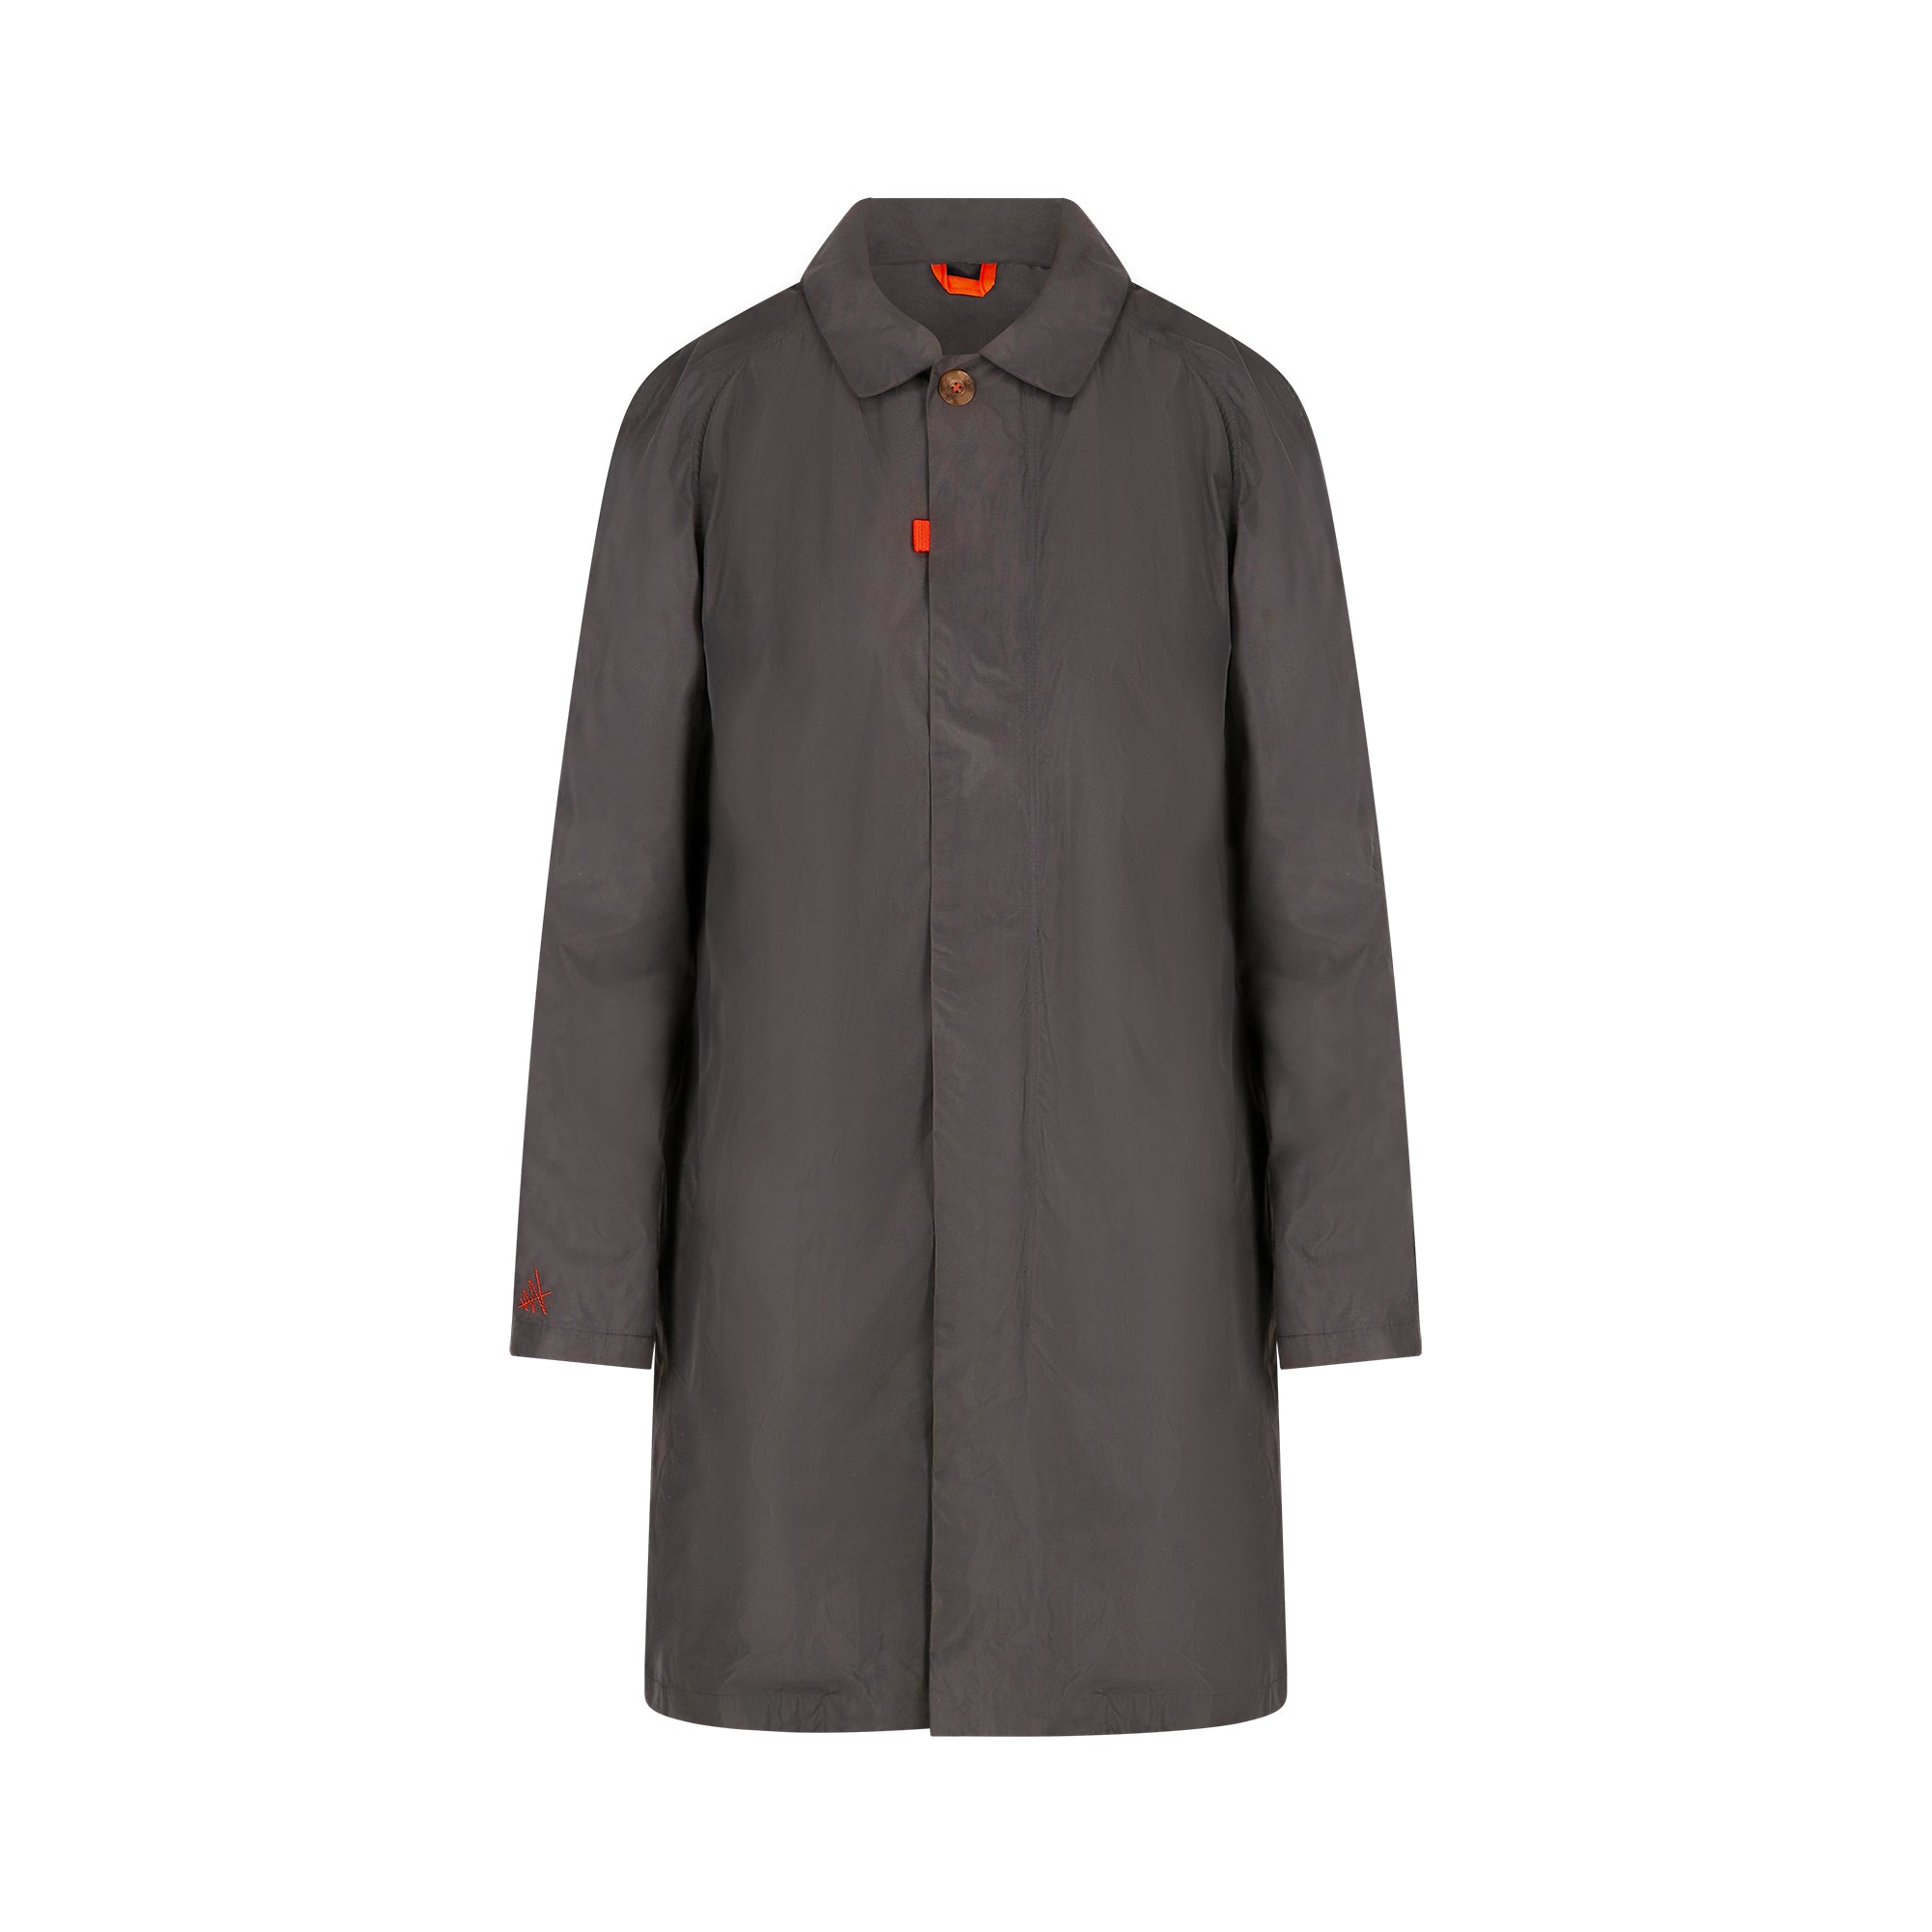 Strato men's raincoat - dark grey color - front view